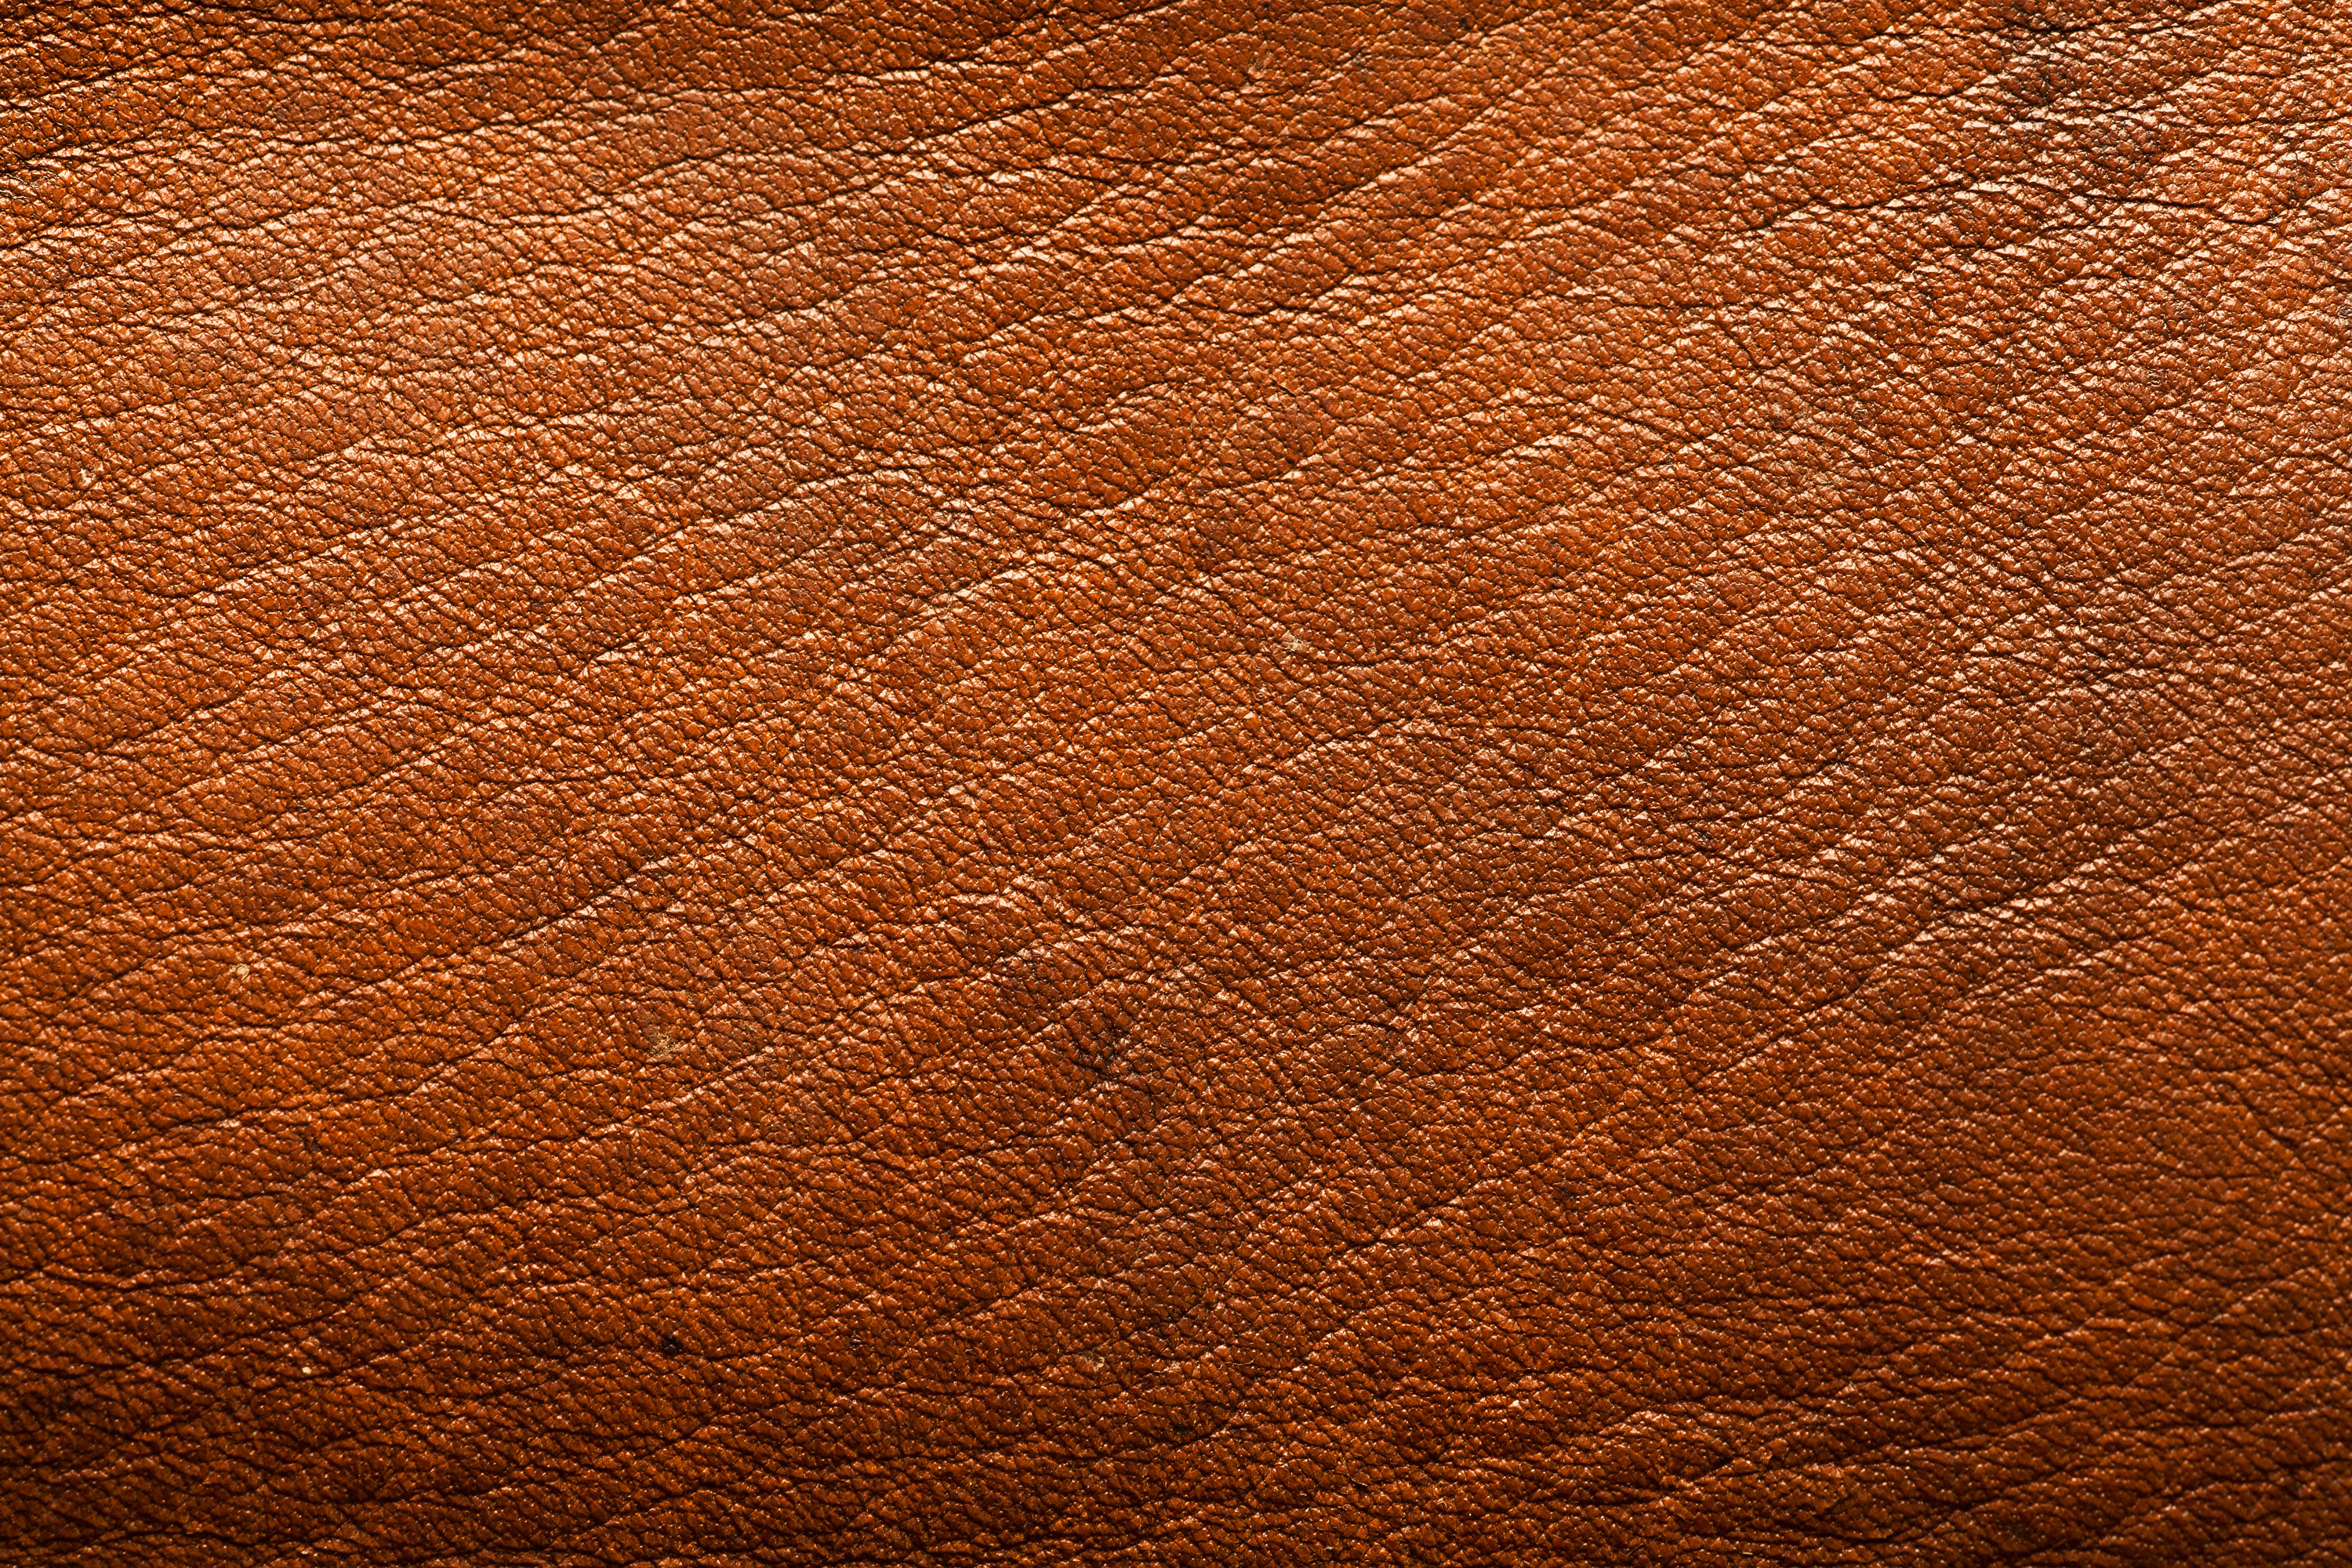 Leather HD wallpapers, Desktop wallpaper - most viewed